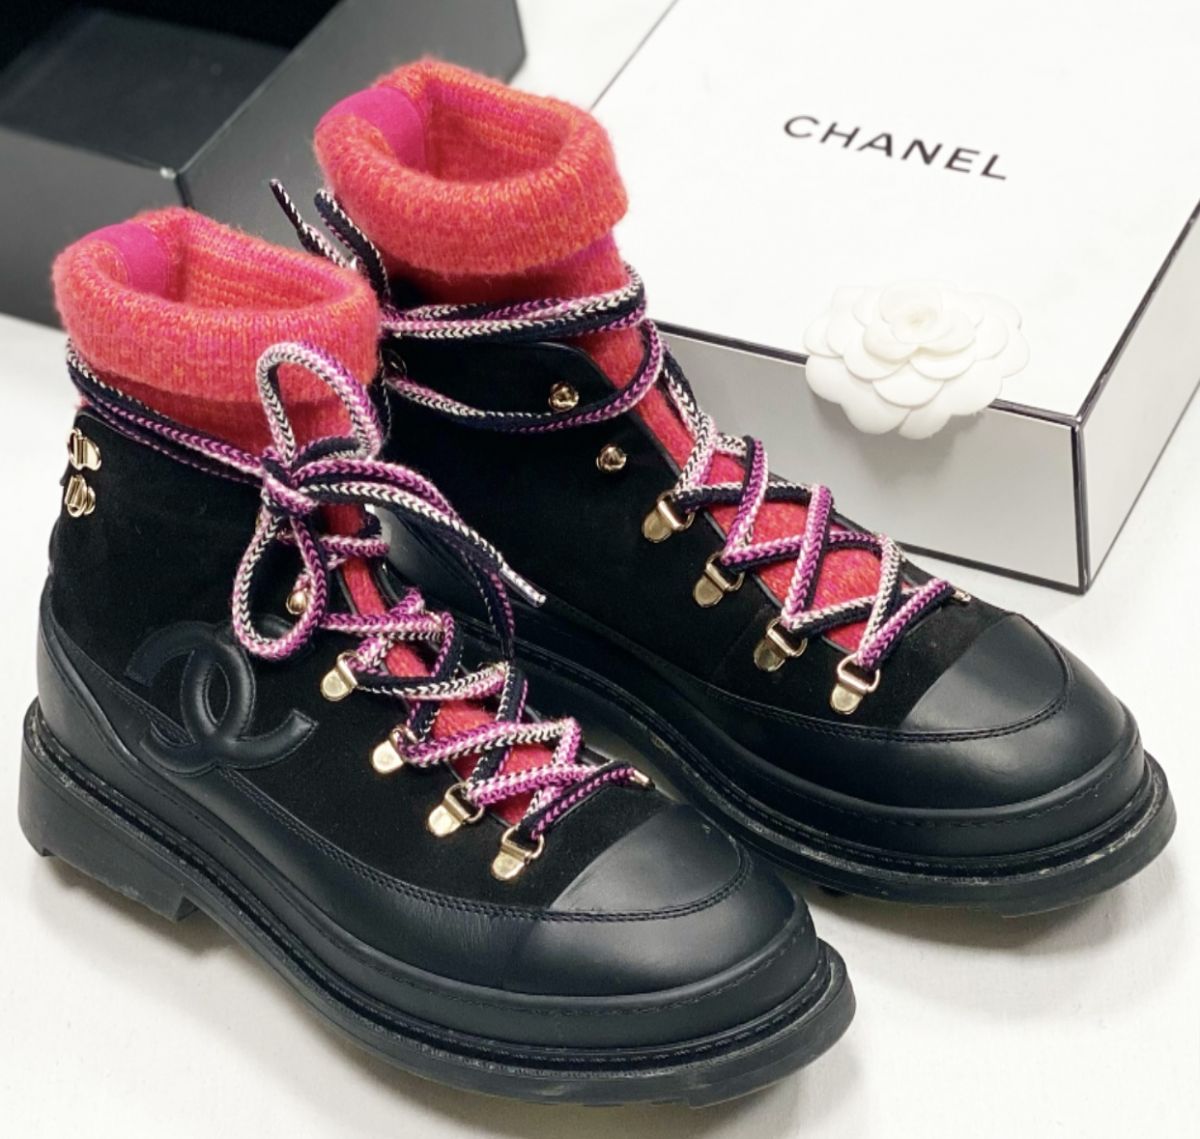 Ботинки Chanel размер 39 цена 61 540 руб 